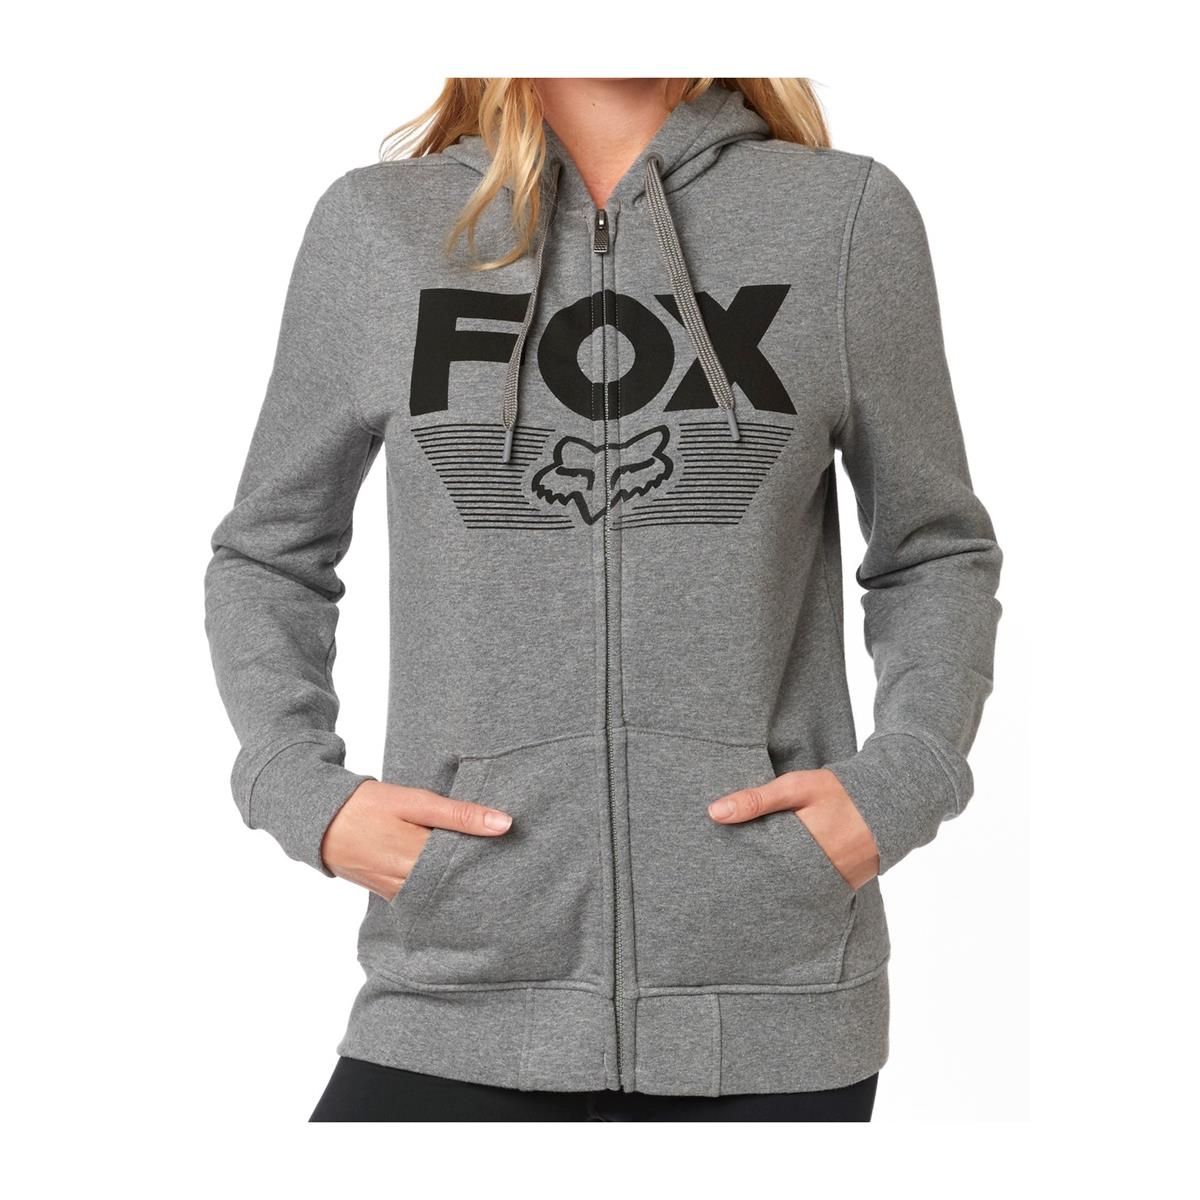 Fox Femme Sweat Asot Heather Graphite